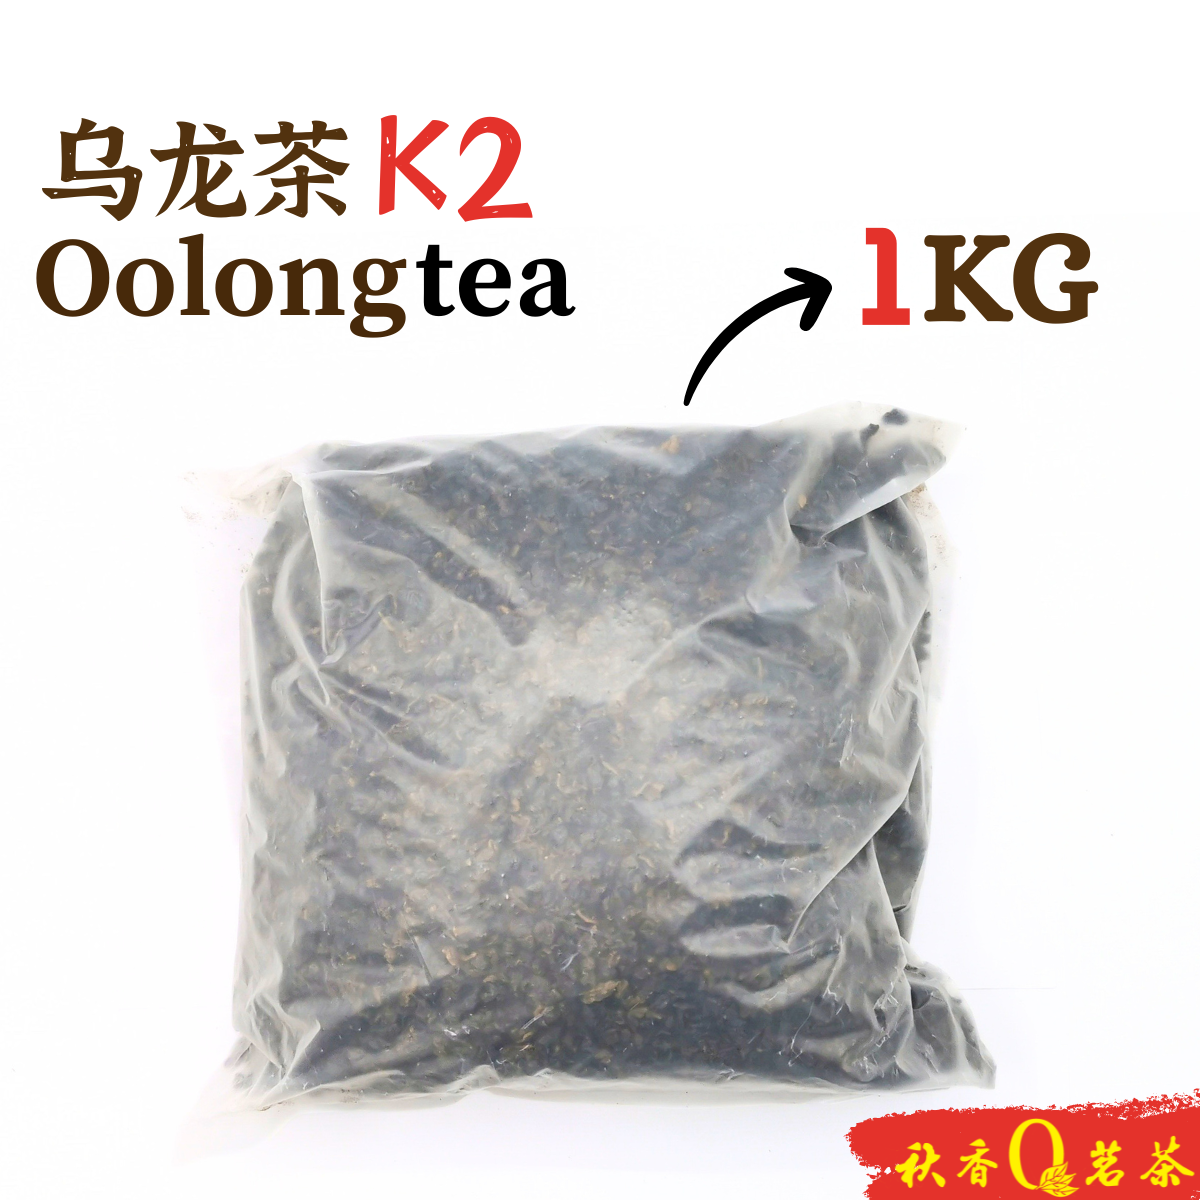 乌龙茶 K2 Oolong Tea K2 【1Kg】